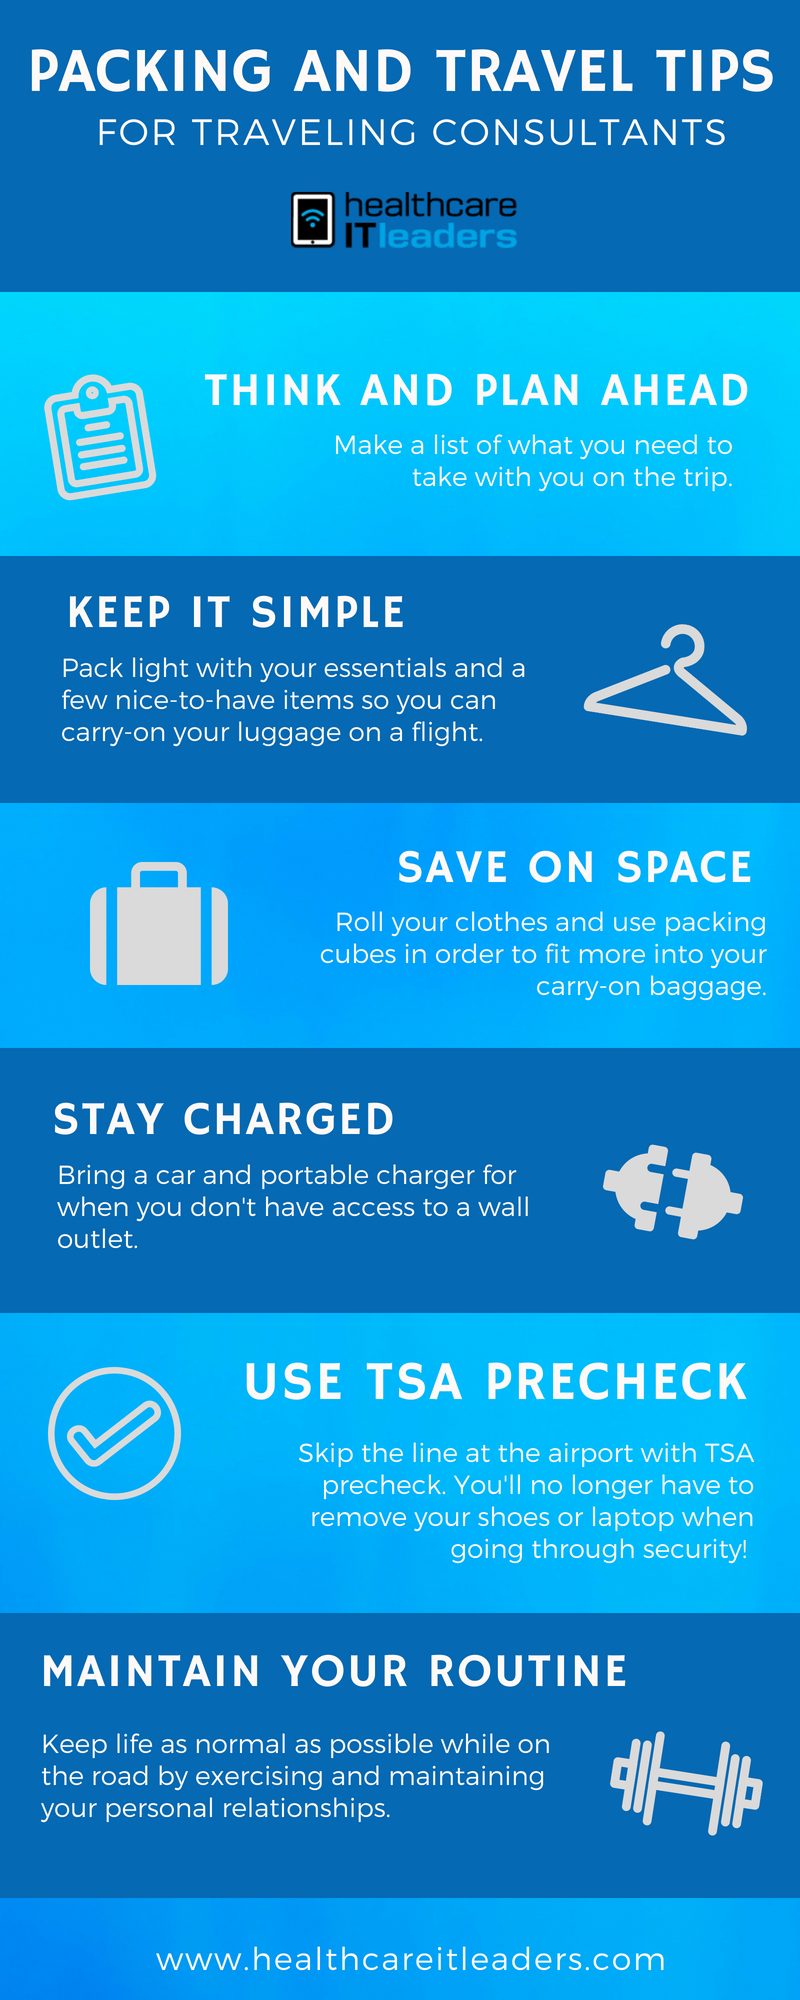 Tips for Travel